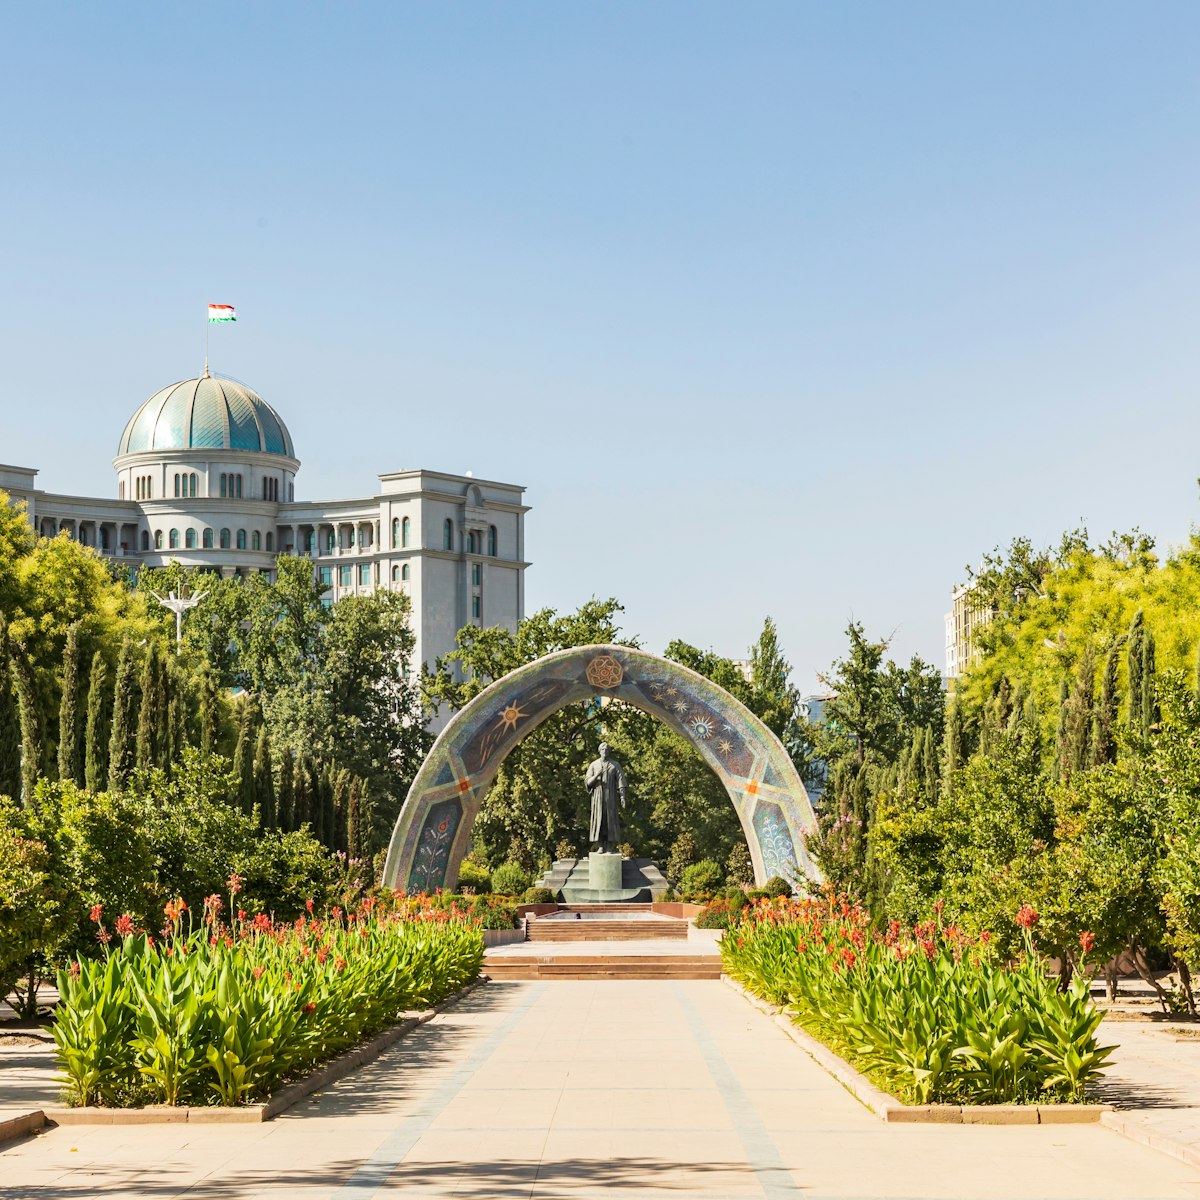 Rudaki Park and the monument to the poet Muhammad Rudaki in Dushanbe, Tajikistan.